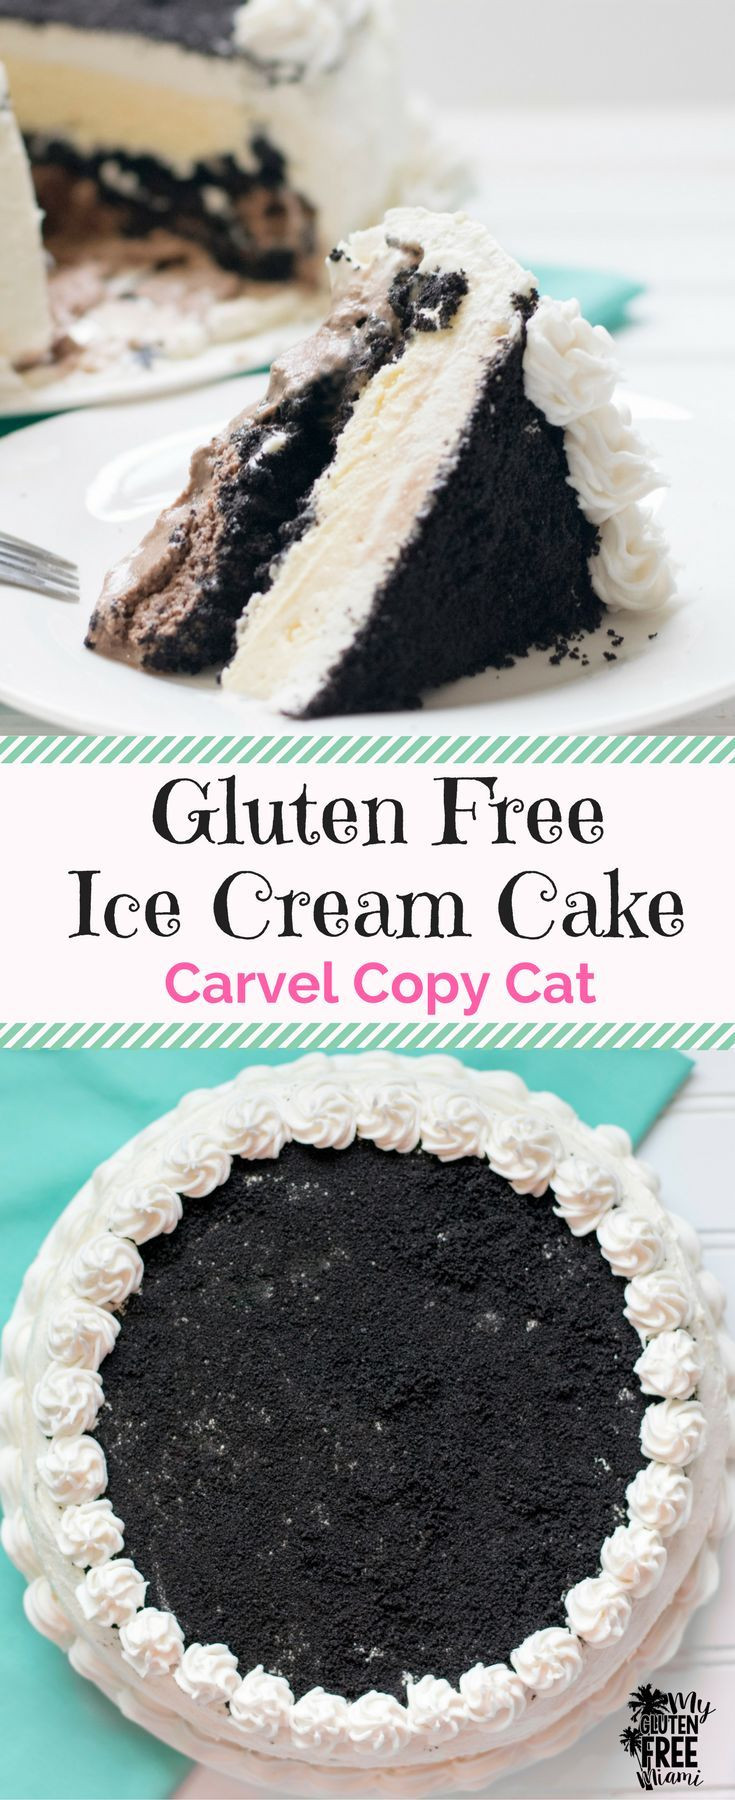 Gluten Free Ice Cream Cake Recipe
 The 25 best Gluten free ice cream cake ideas on Pinterest